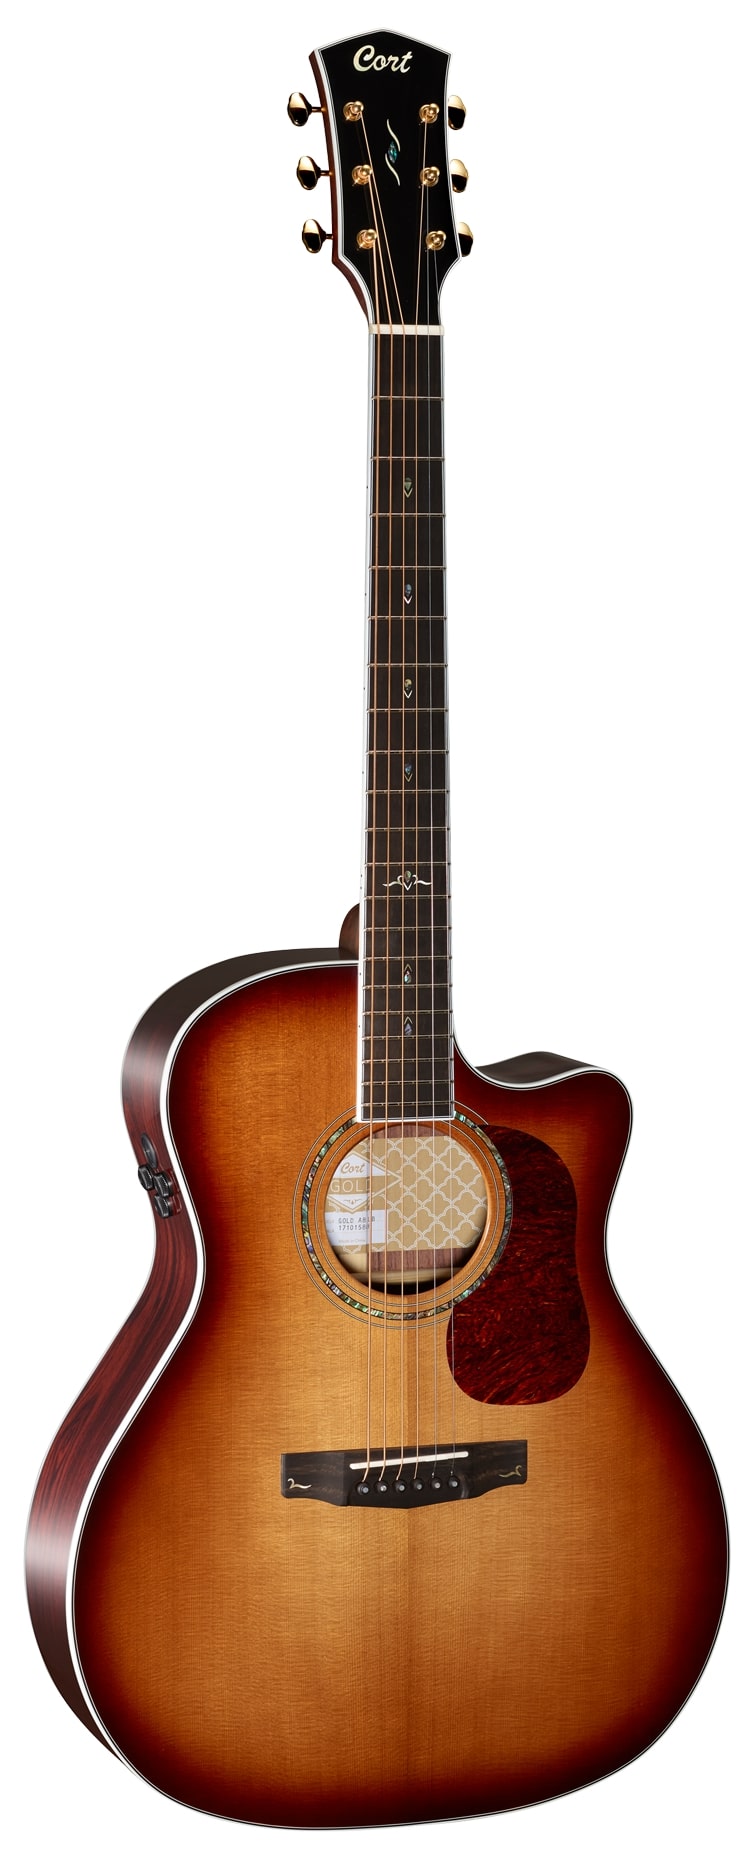 Электроакустические гитары Cort Gold-A8-WCASE-LB (чехол в комплекте) электроакустические гитары cort gold a8 wcase lb чехол в комплекте